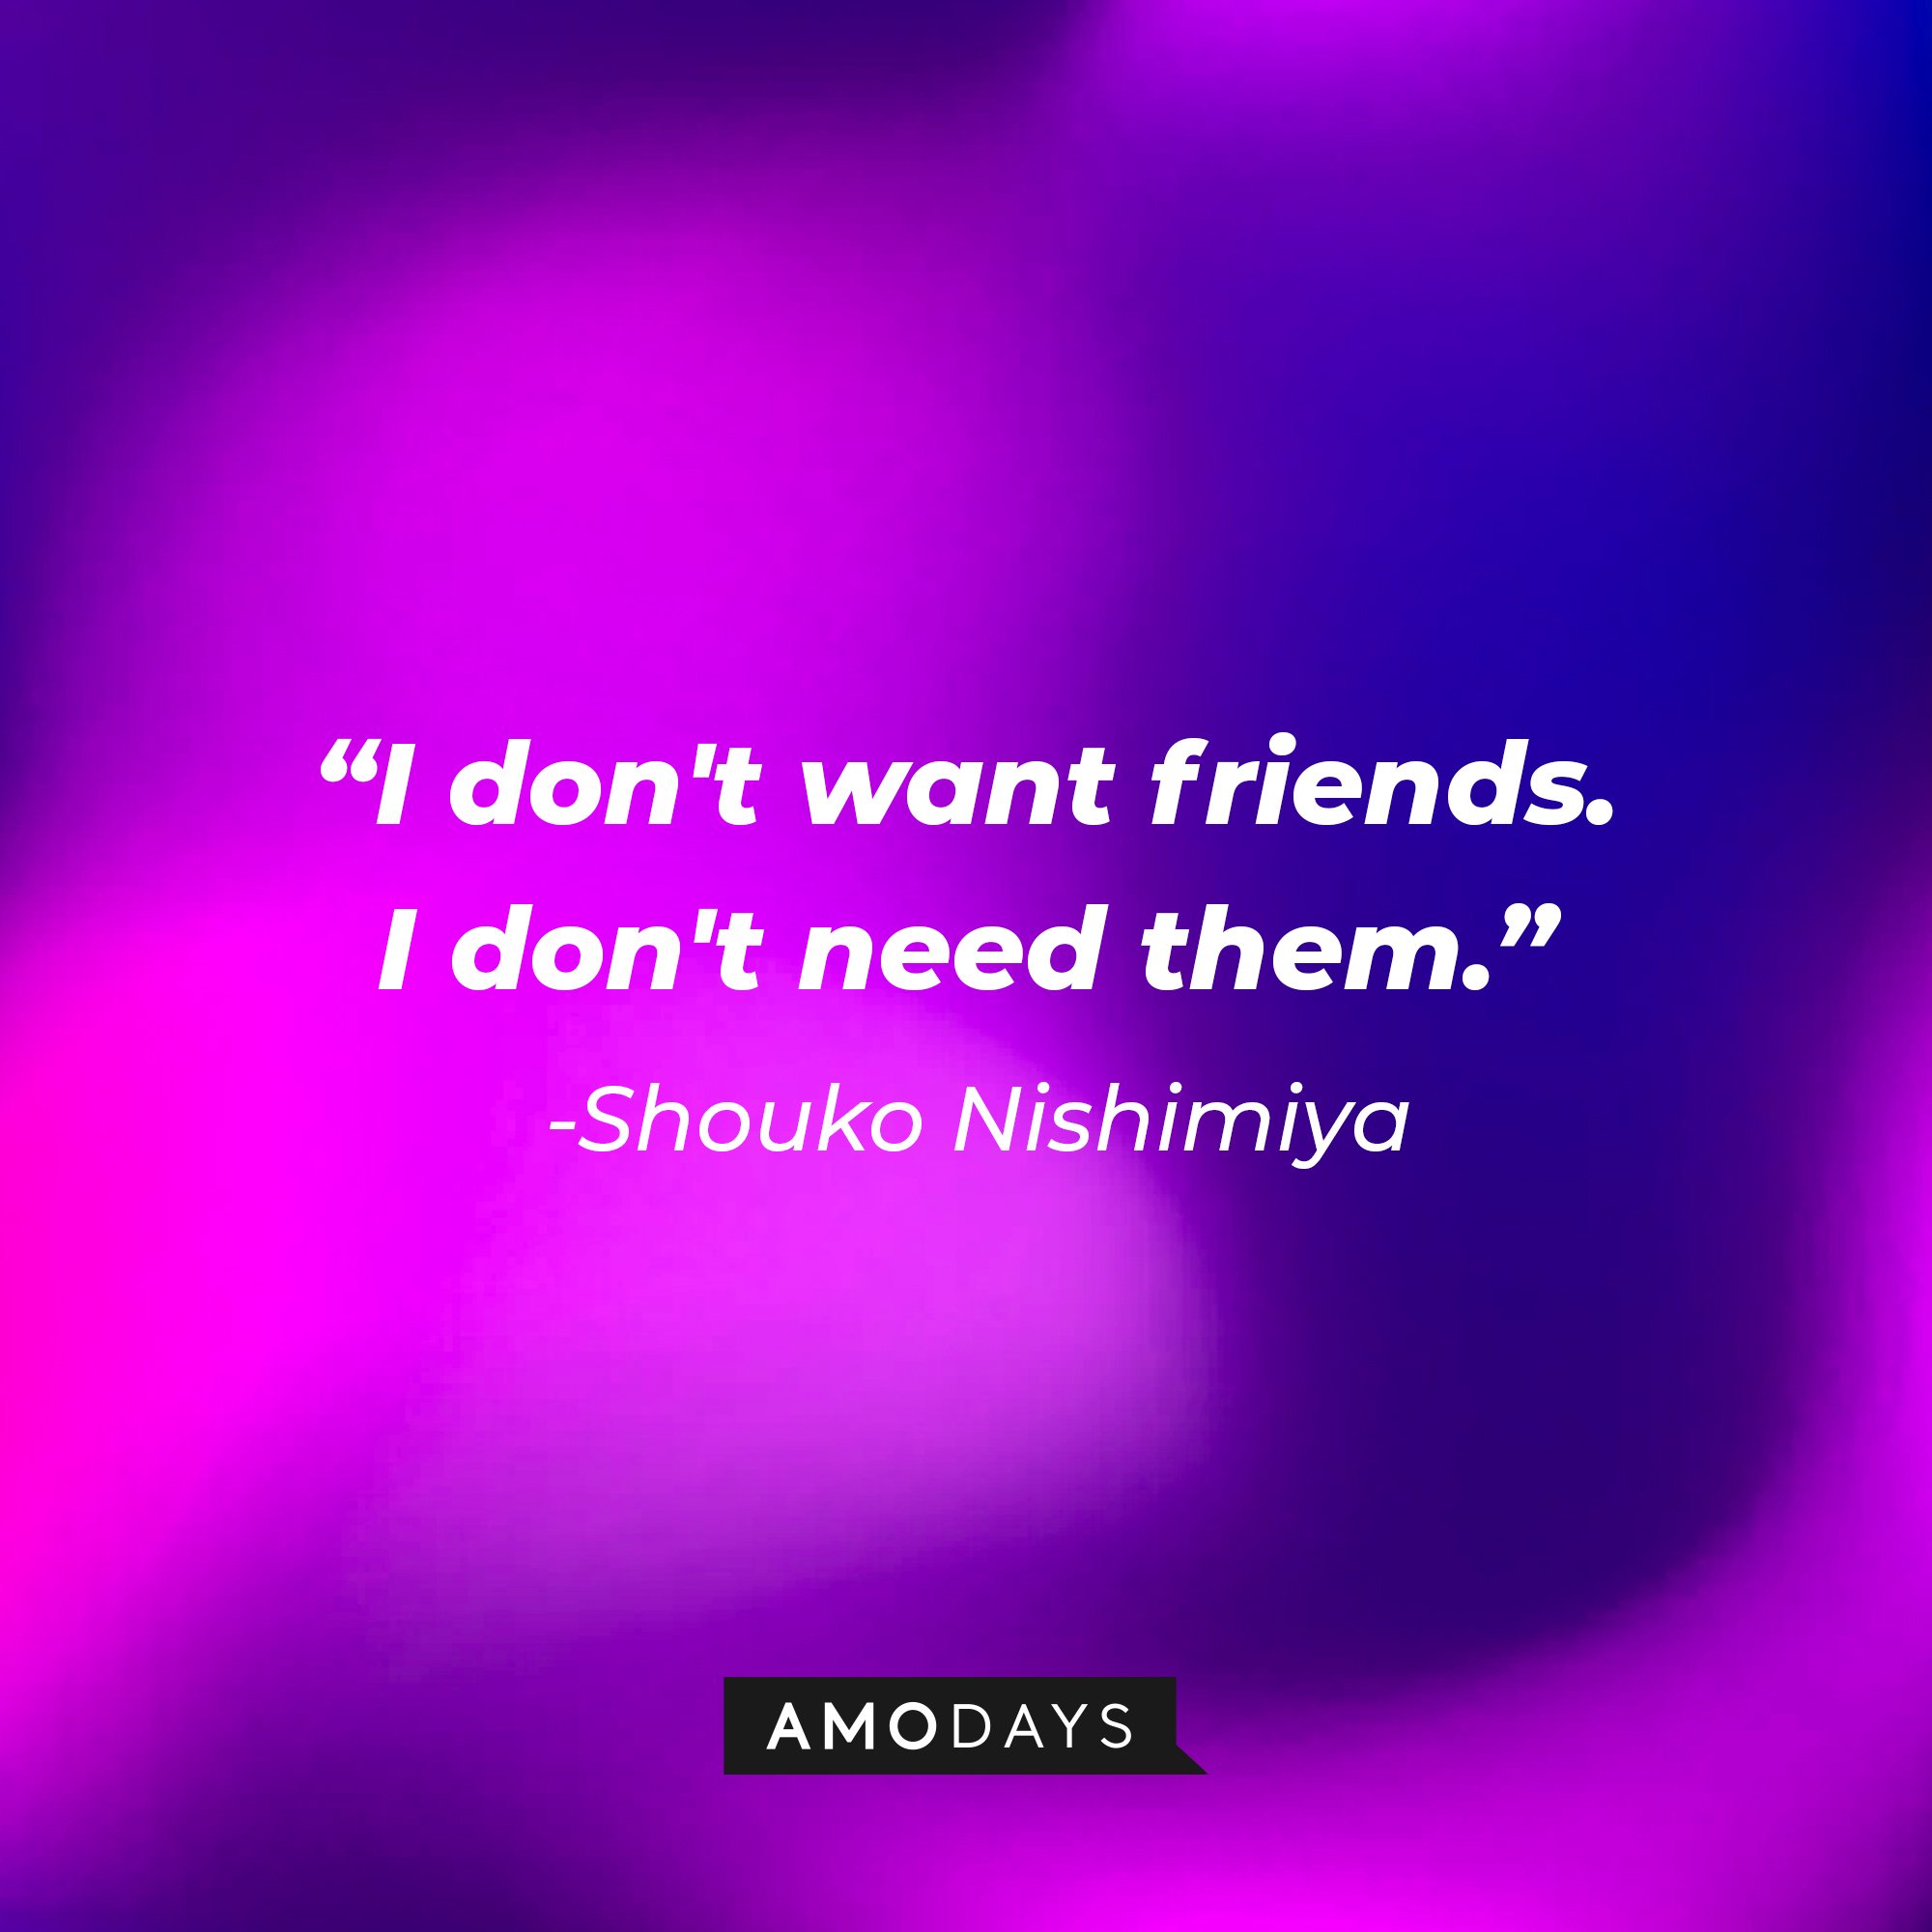 Shouko Nishimiya’s quote: "I don't want friends. I don't need them." | Image: AmoDays